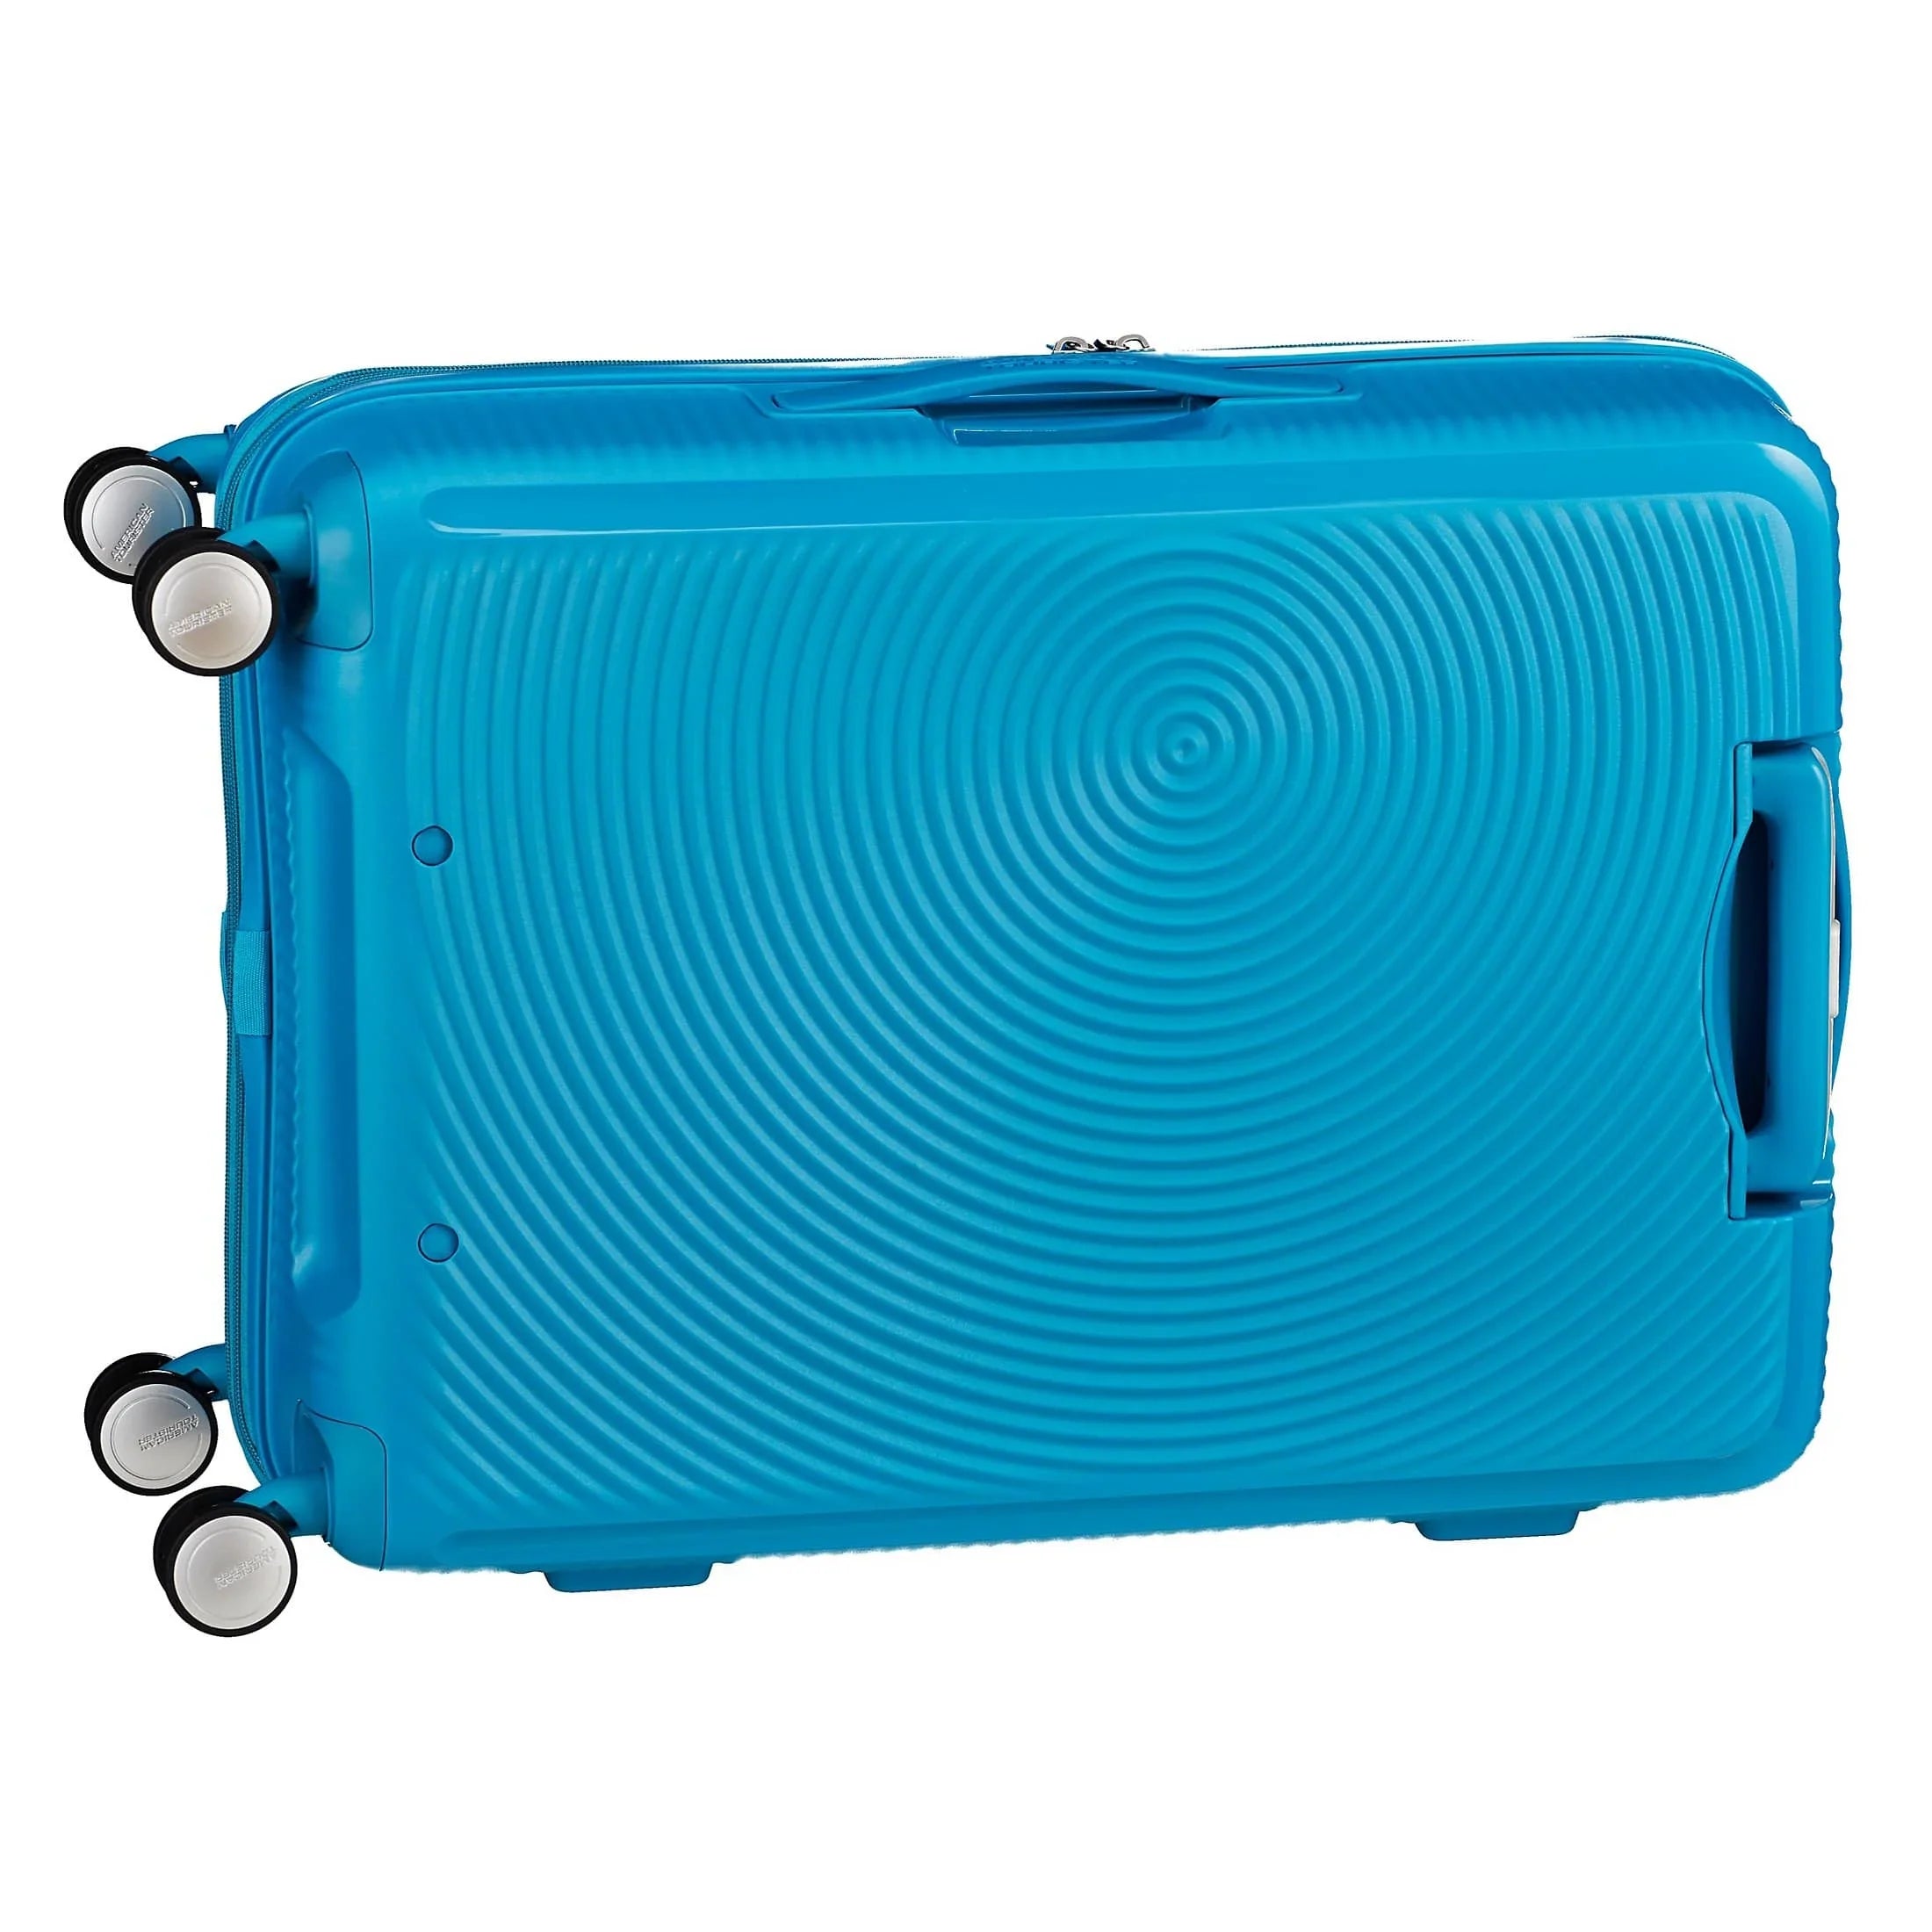 American Tourister Soundbox 4-Rollen-Trolley 67 cm - poolside blue